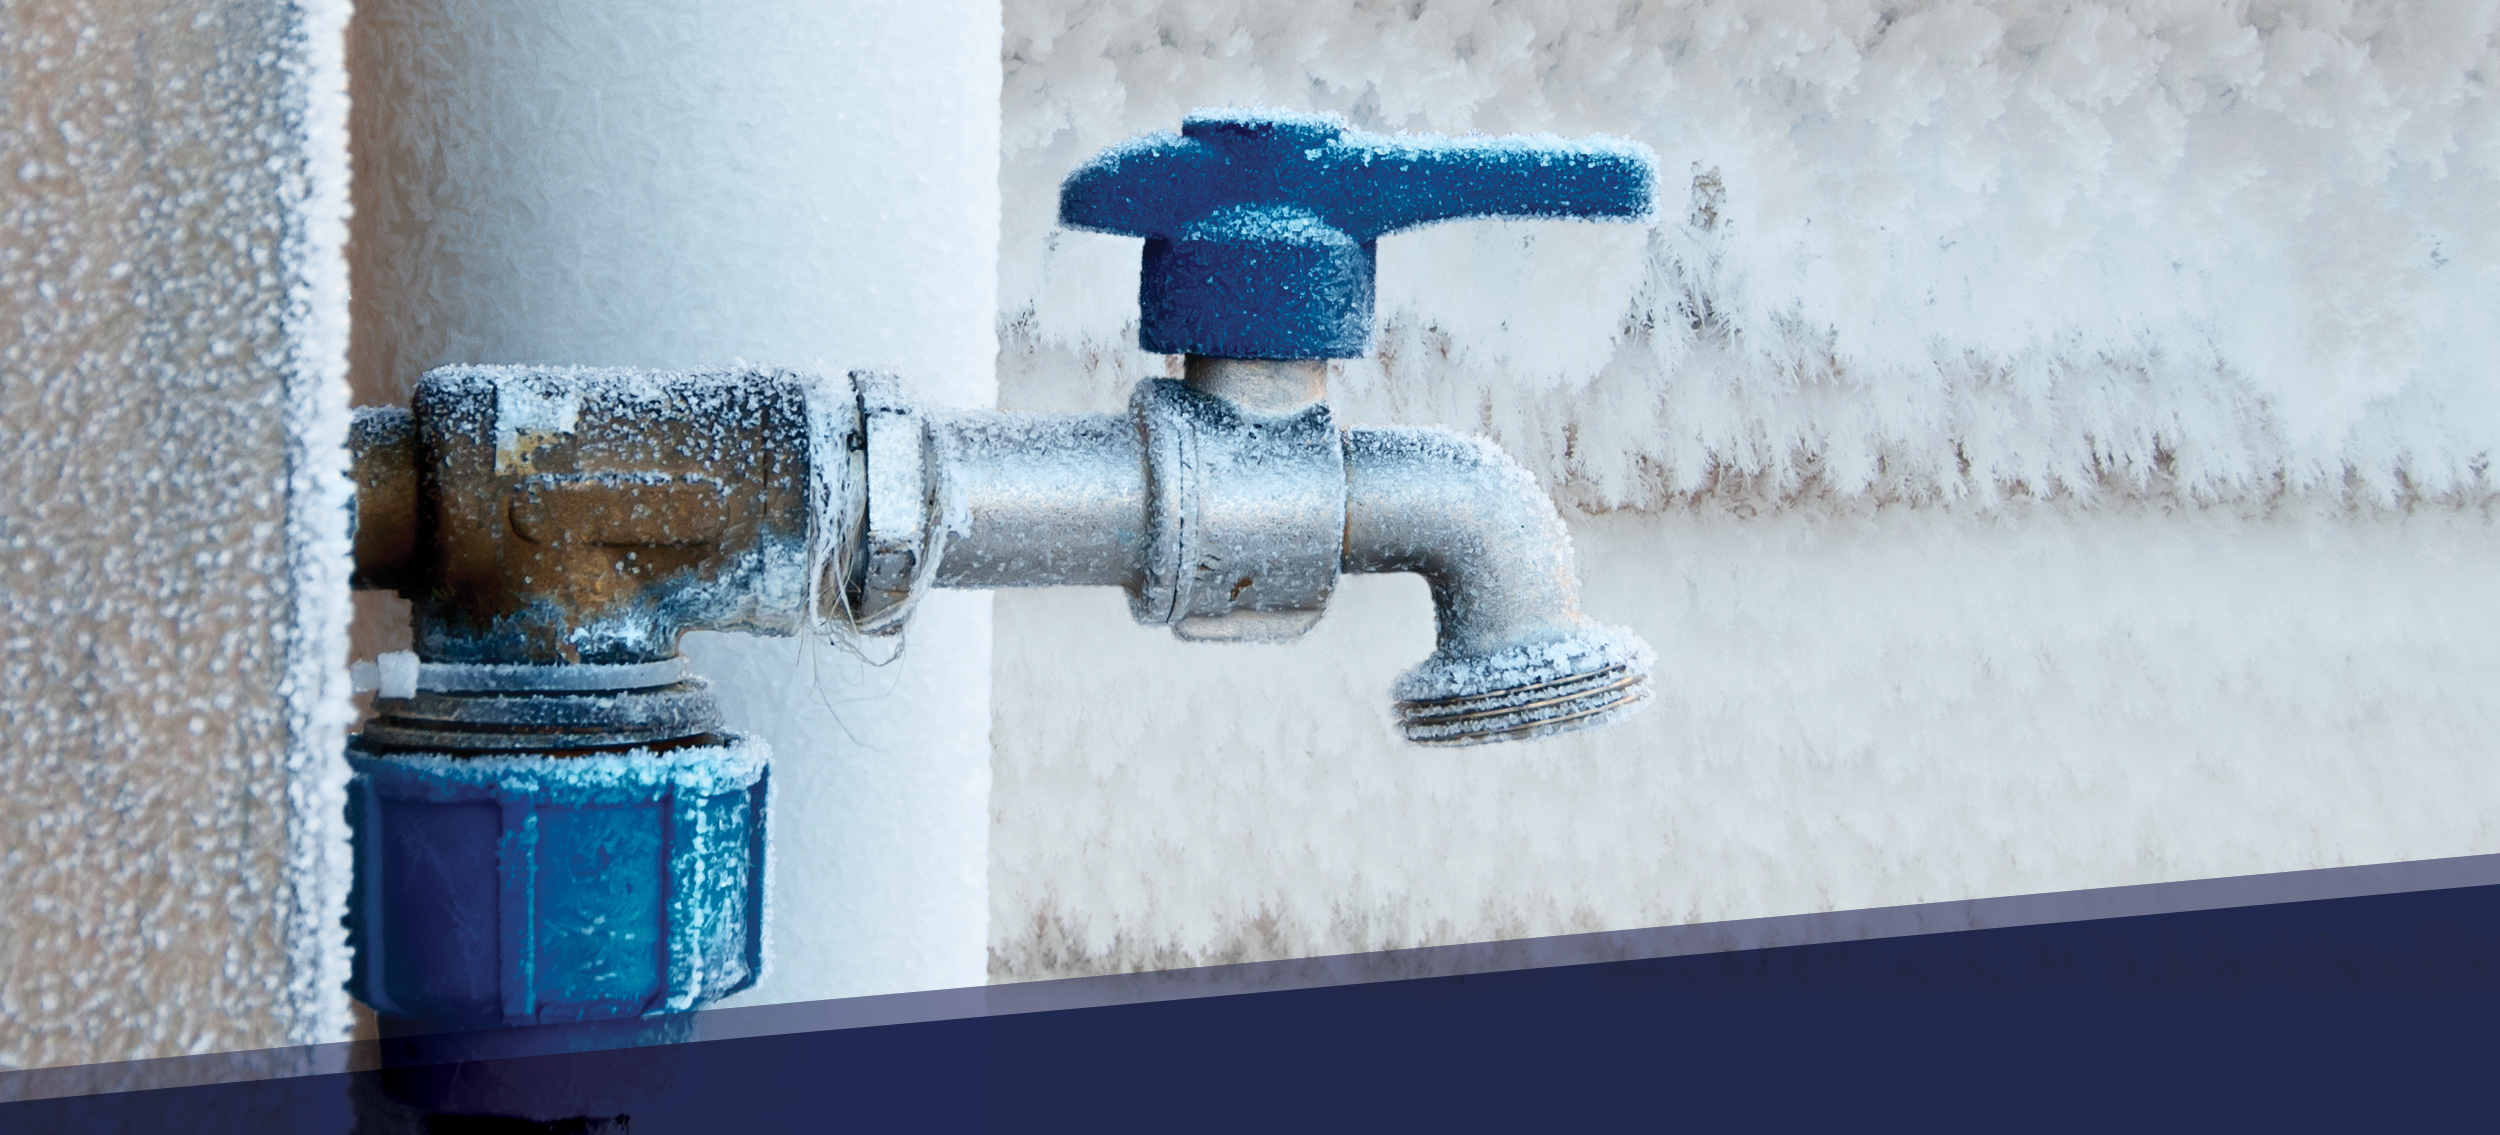 Winter Maintenance Guide: Frozen pipes